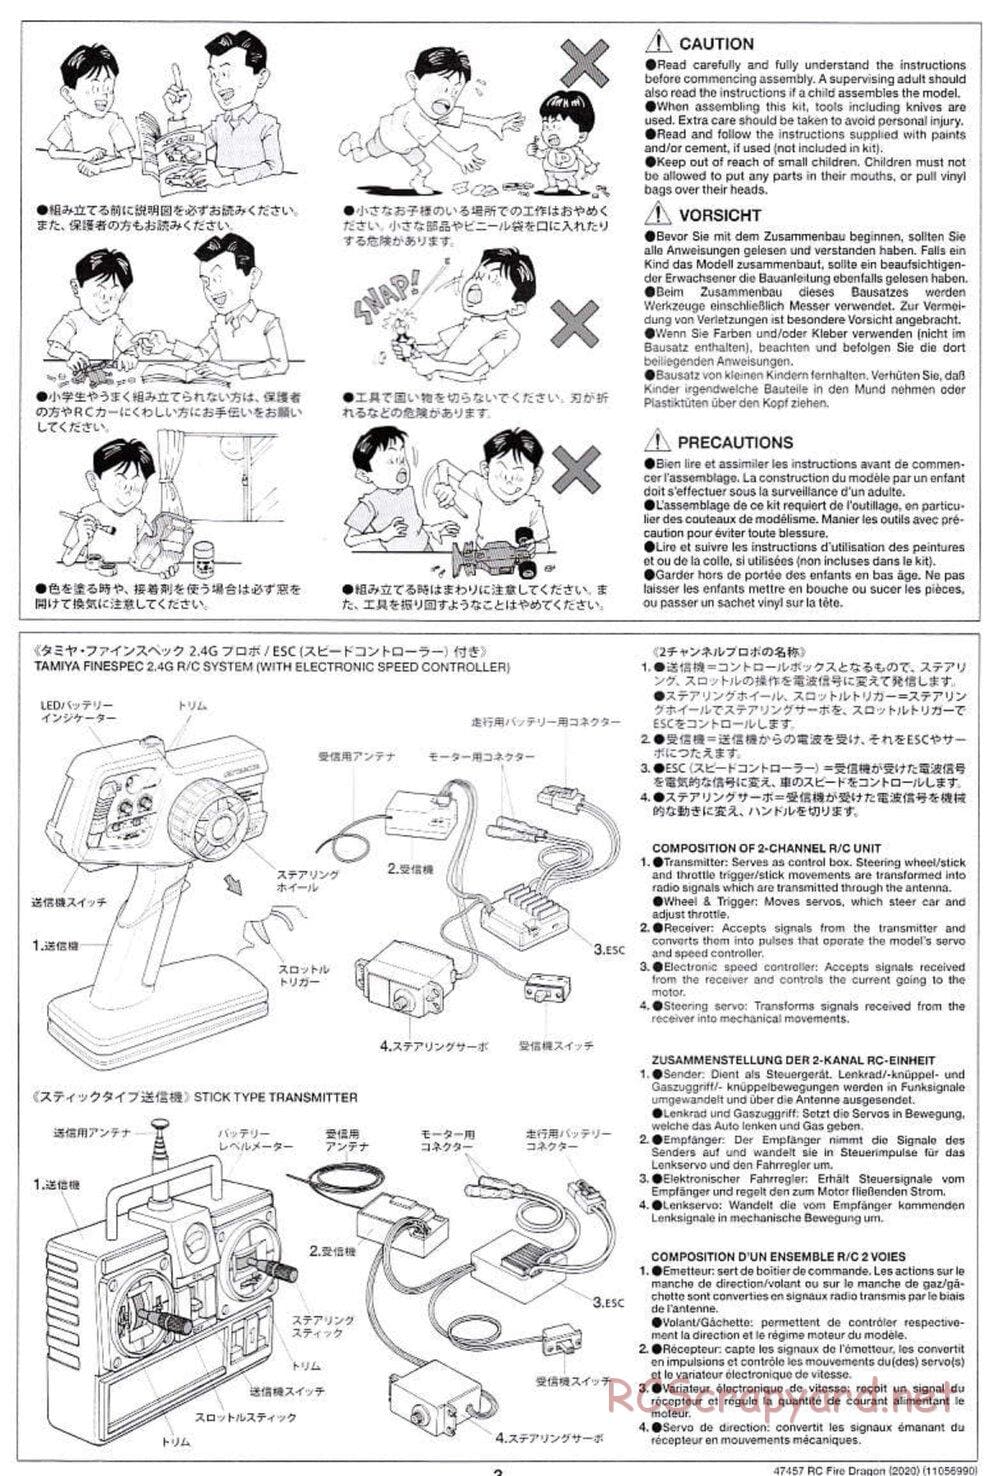 Tamiya - Fire Dragon (2020) Chassis - Manual - Page 3